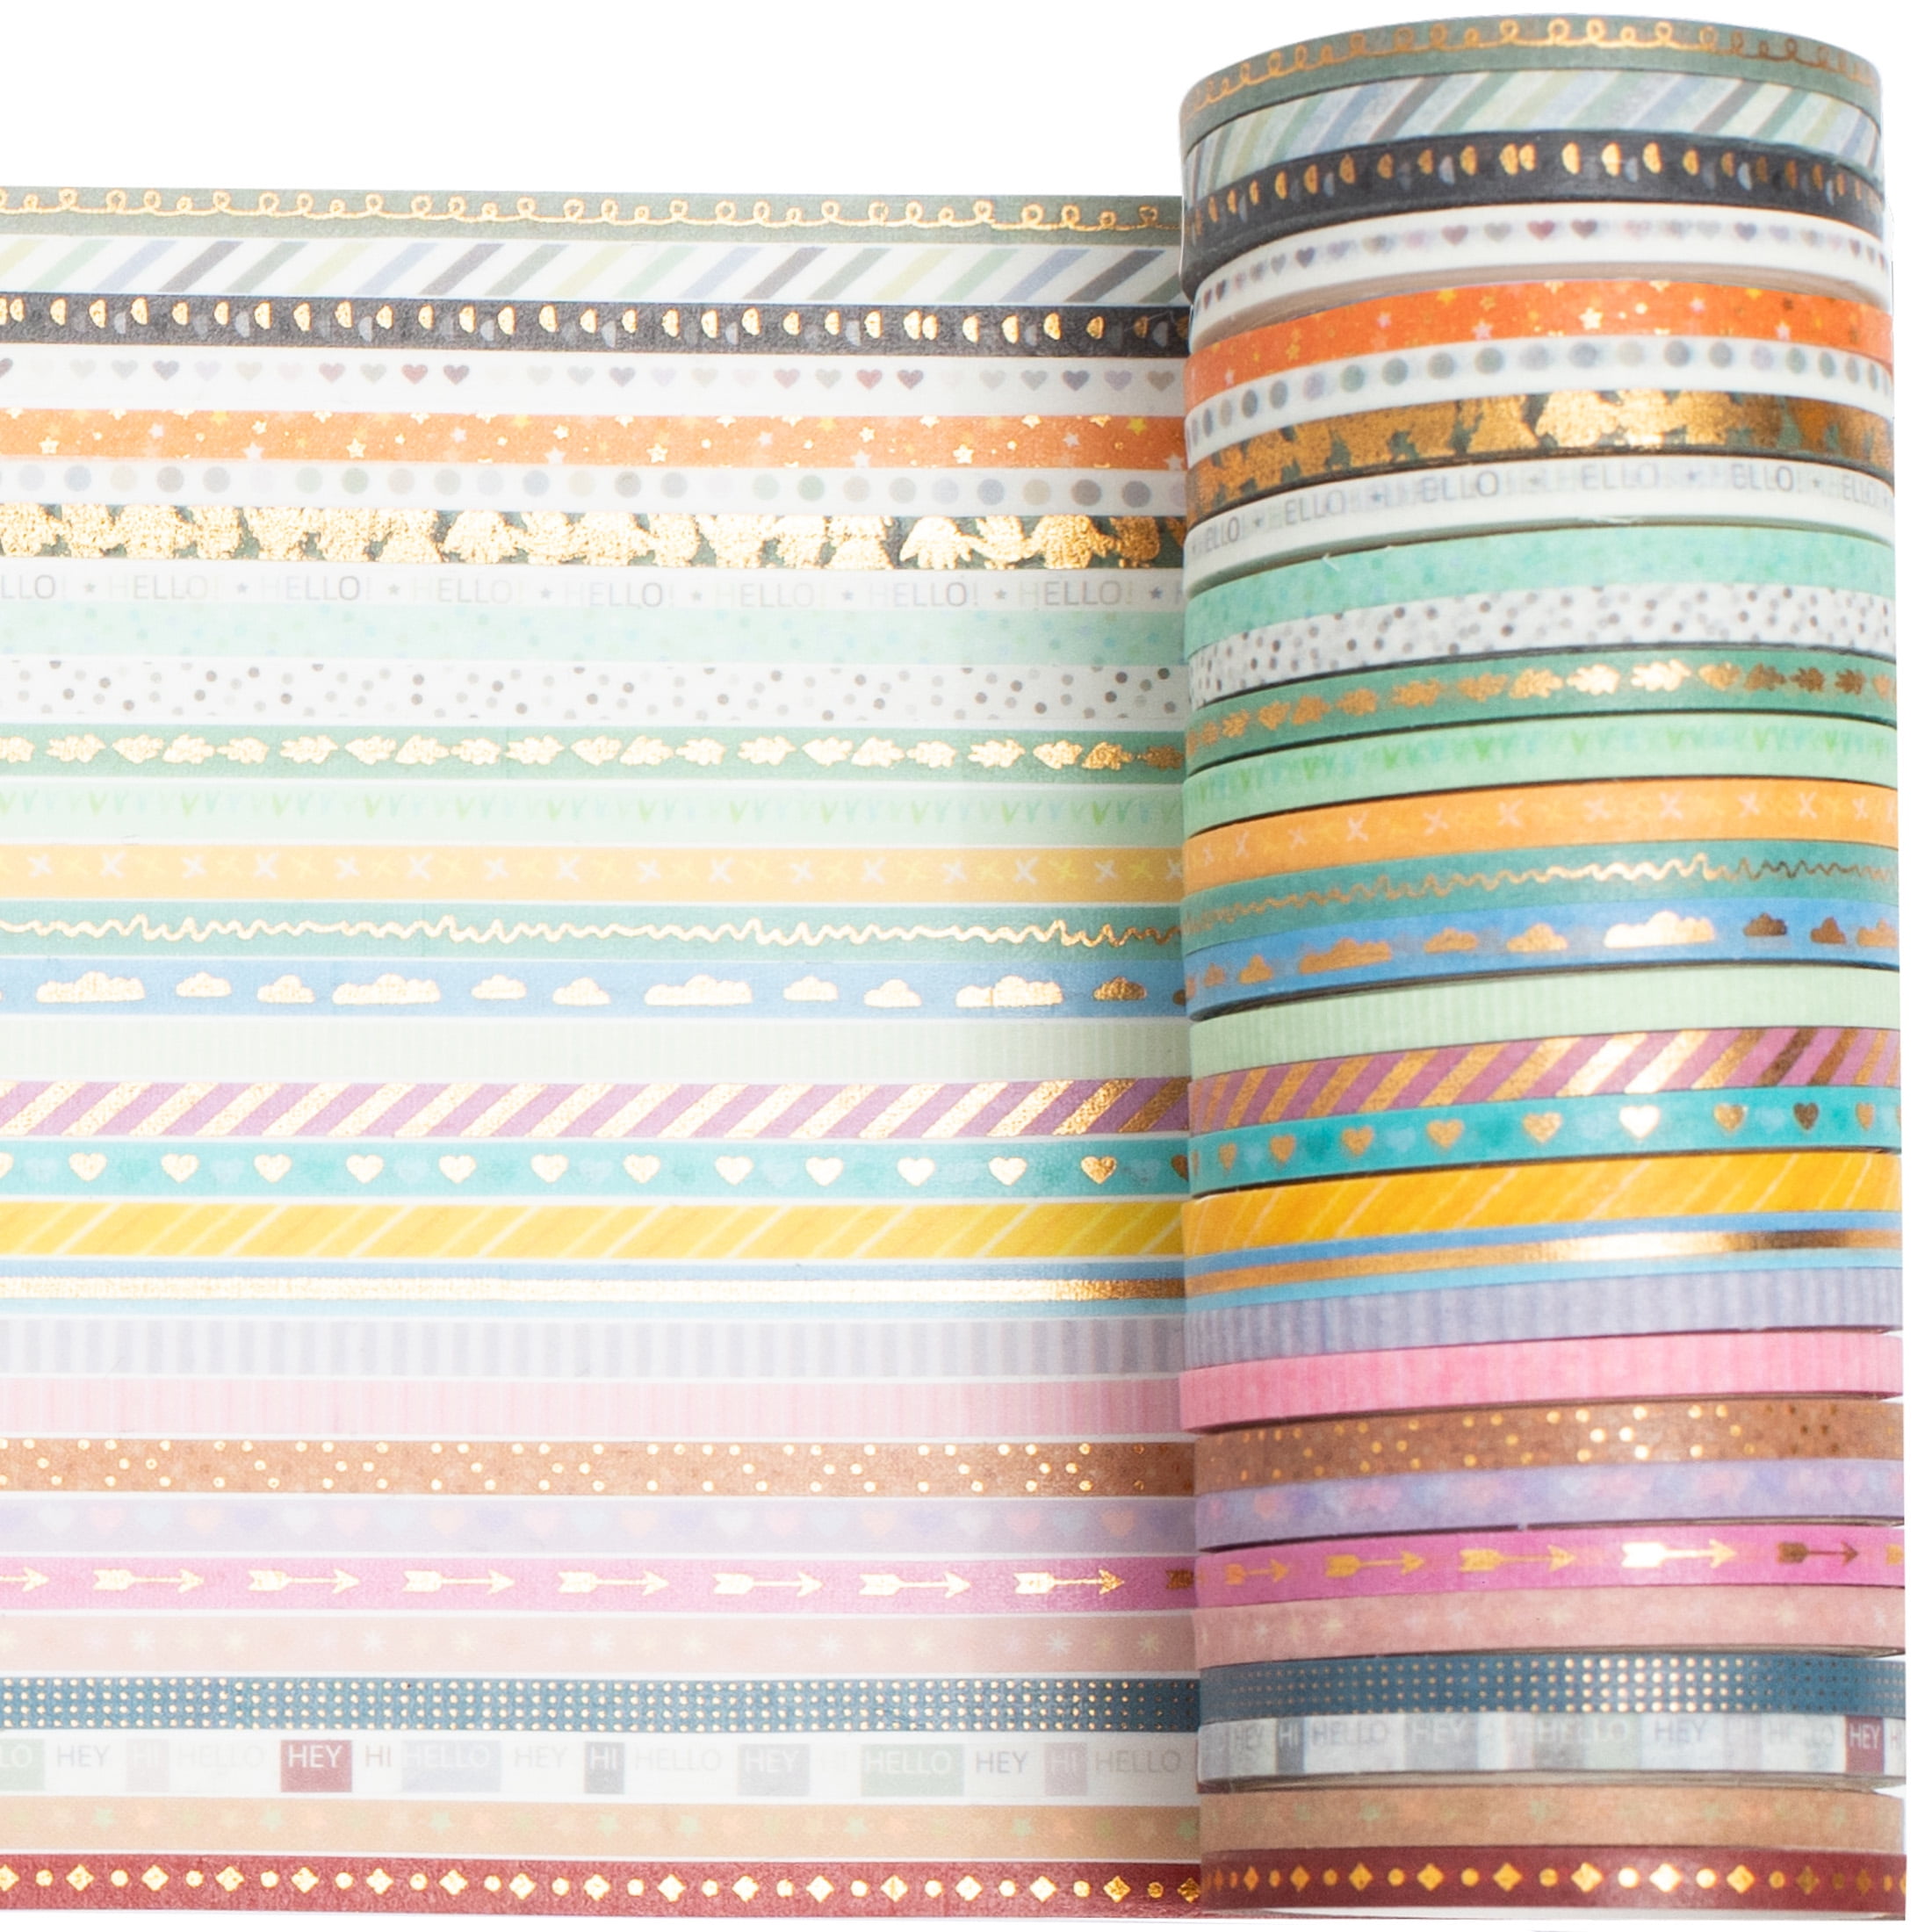 VEWINGL 60 Rolls Washi Tape Set,8 mm Wide Decorative Colored